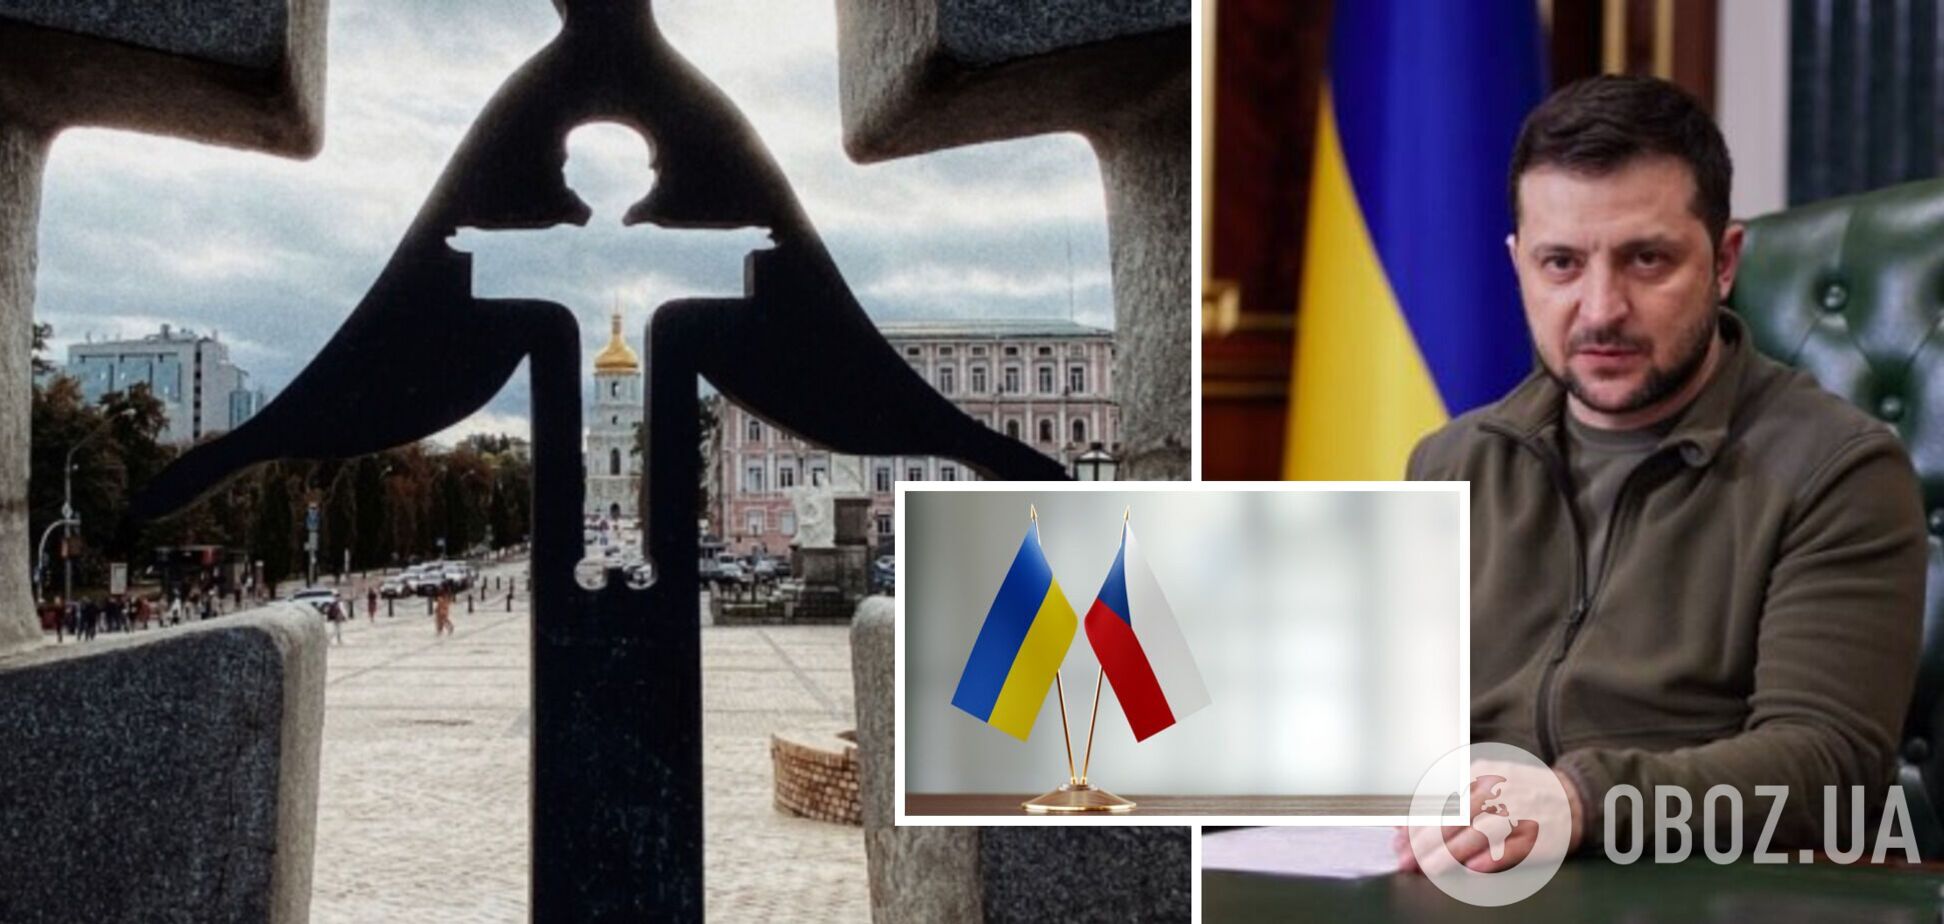 Сенат Чехії визнав Голодомор геноцидом українського народу, – Зеленський